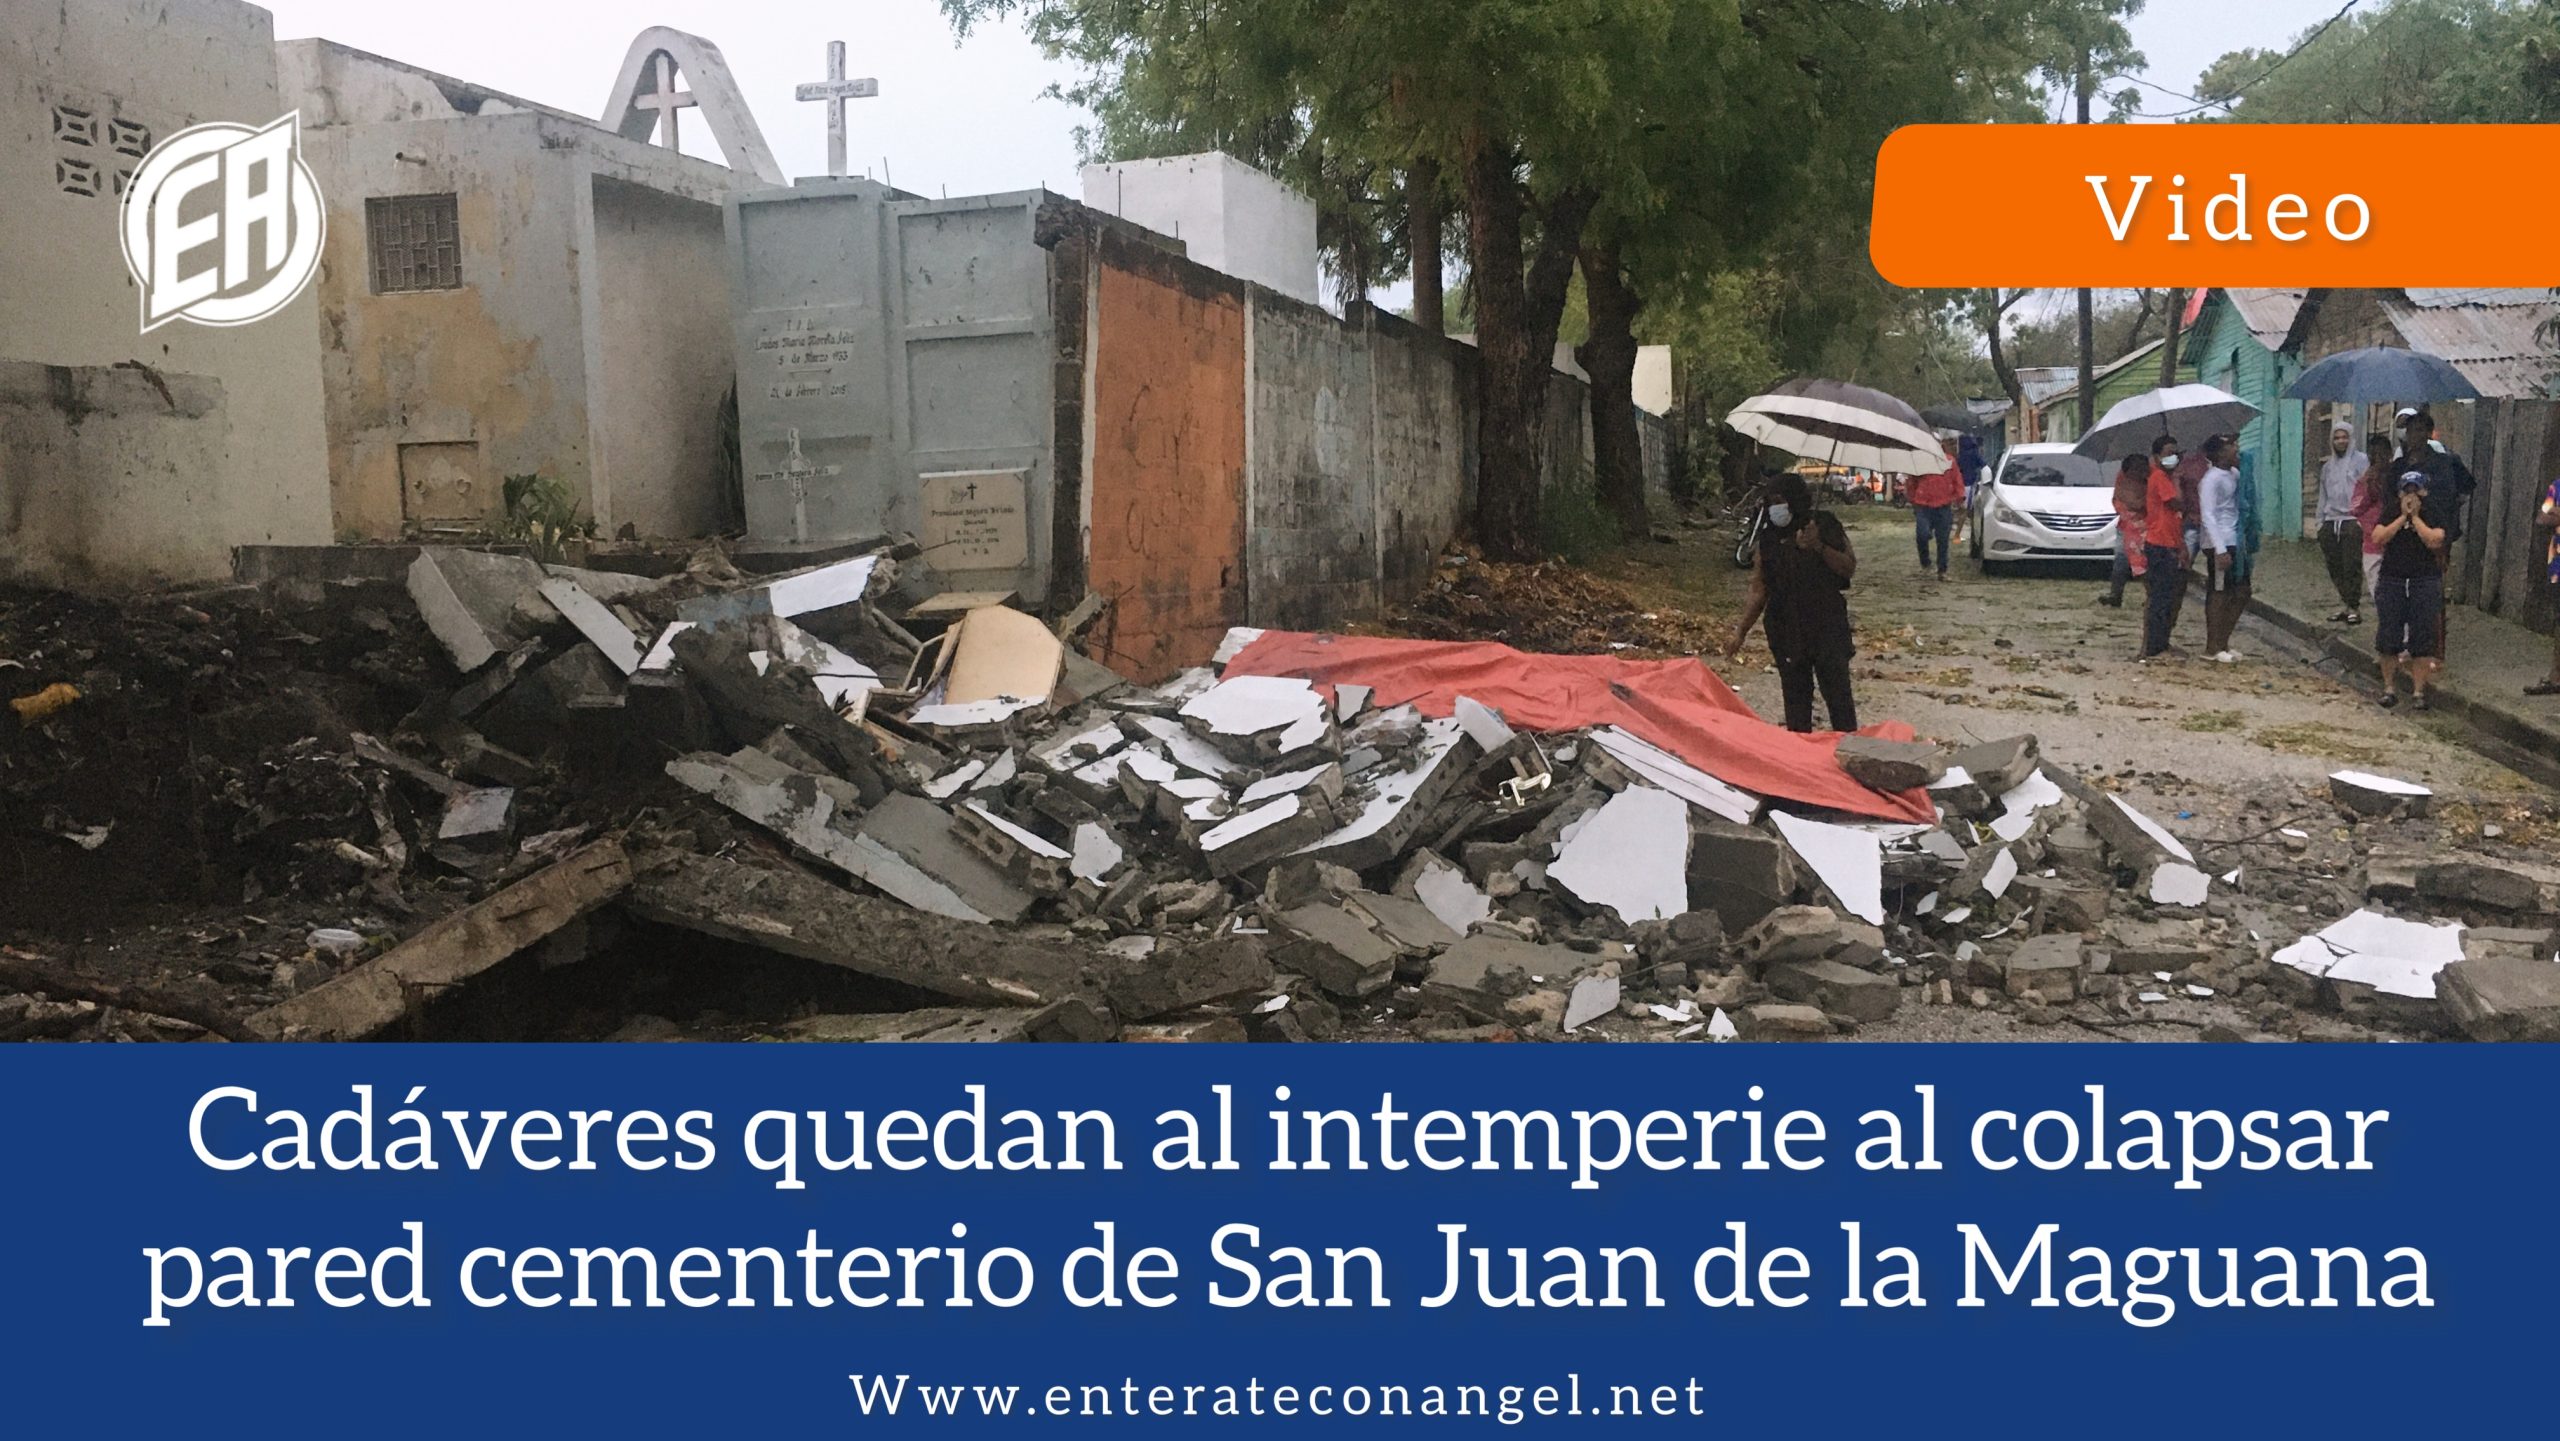 Cadáveres quedan al intemperie al colapsar pared cementerio de San Juan de la Maguana; Alcaldia acude a evaluar daños